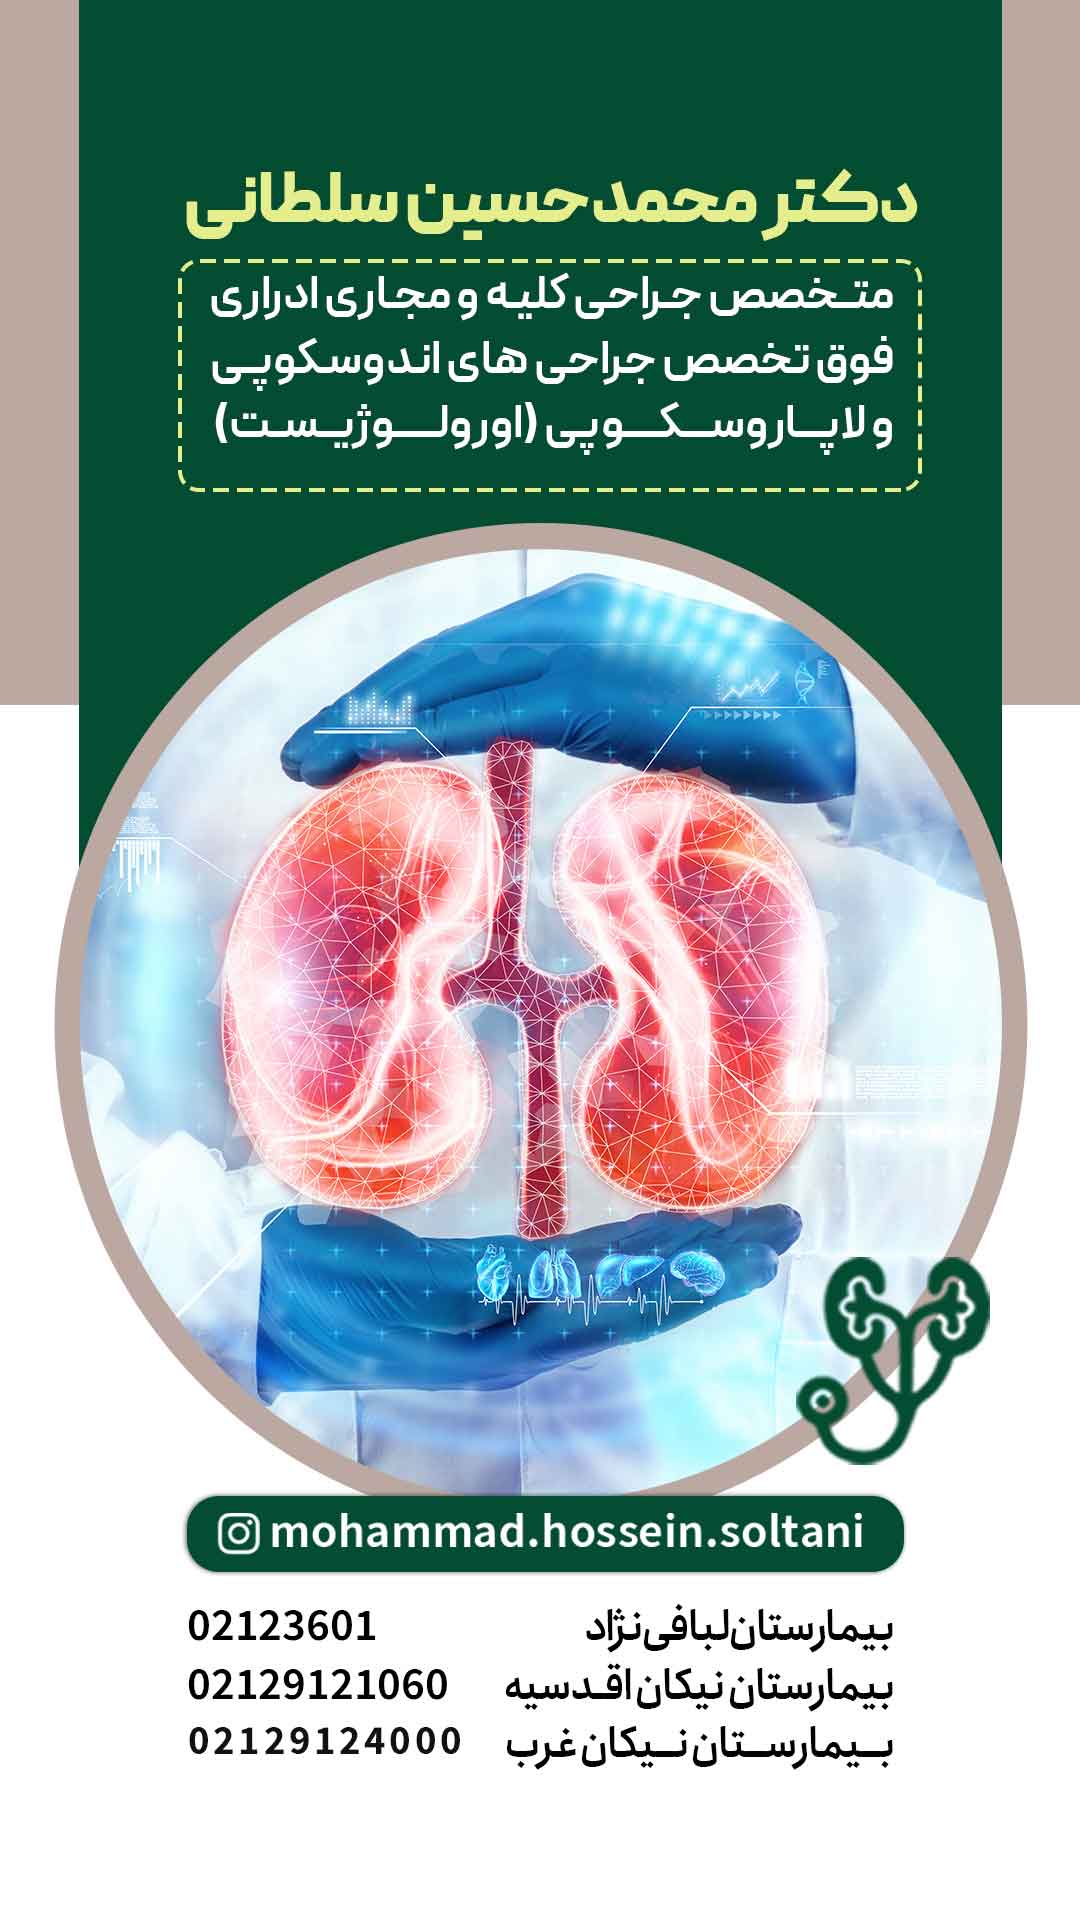 Dr-Mohammad-Hossein-Sultani-Urinary-Tract-Specialist--Urologist-in-tehran6